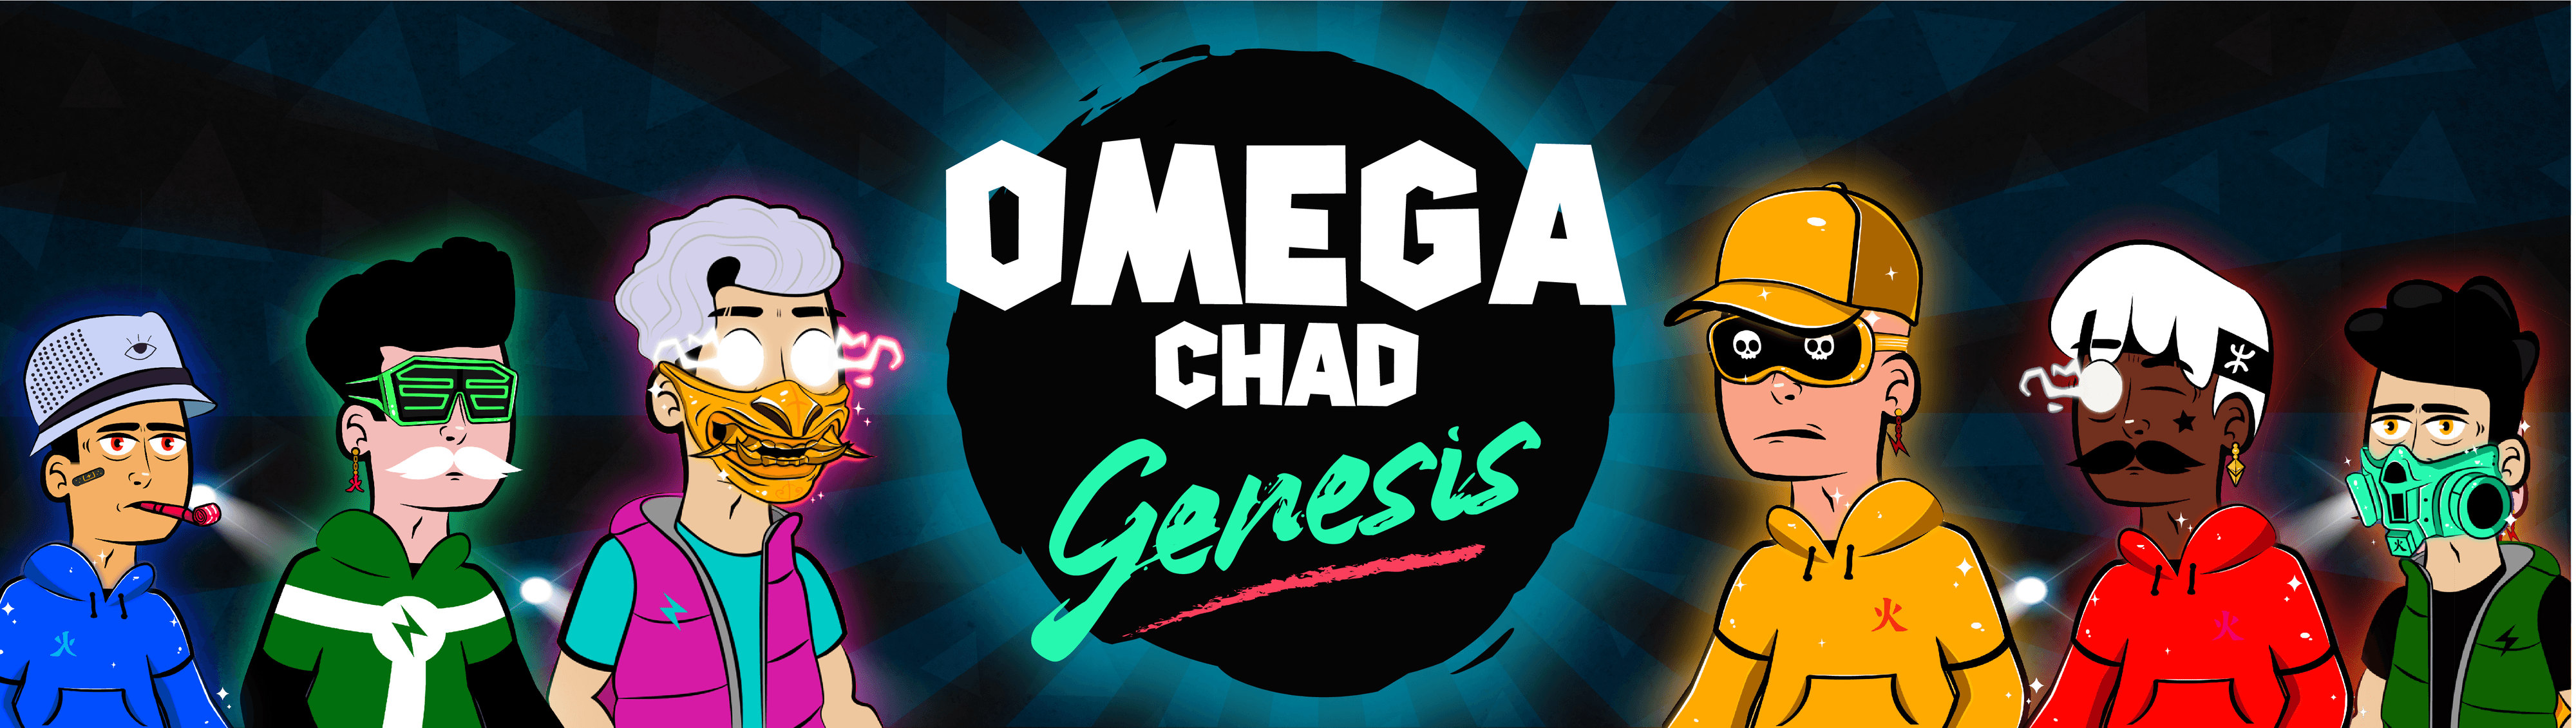 OmegaChad : Genesis